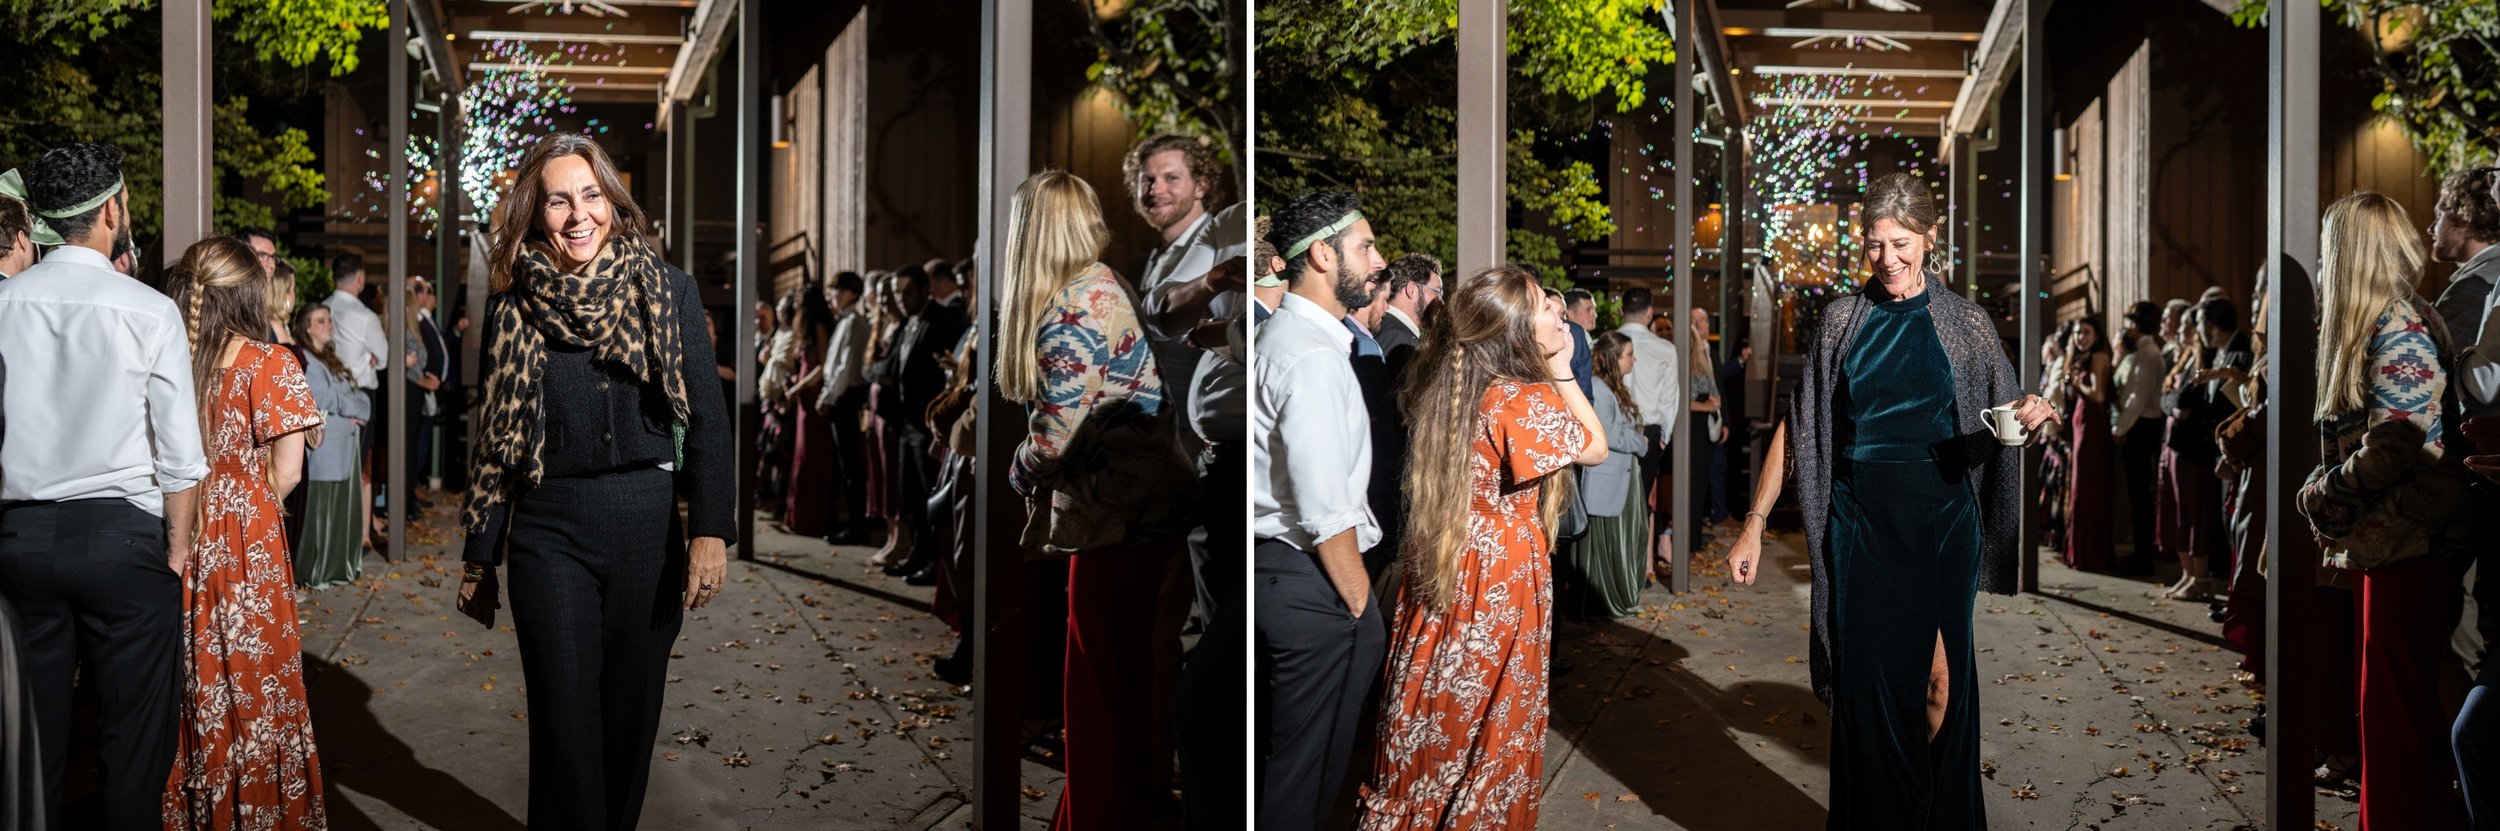 October Wedding in Asheville at The Crest Center - Raleigh Wedding Photographer2 21.jpg